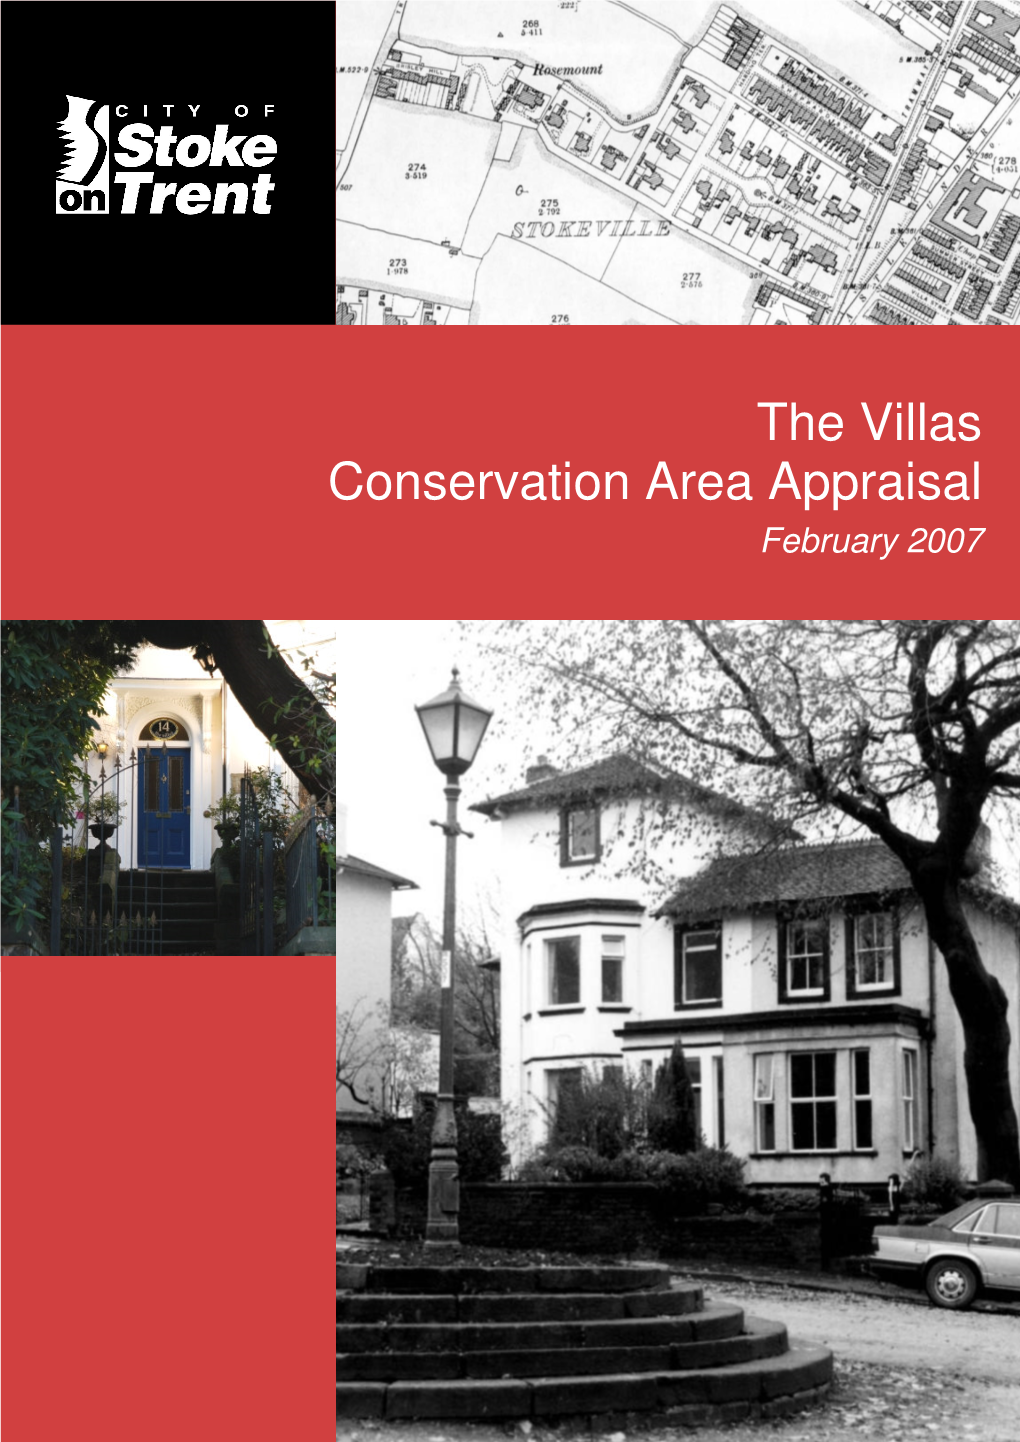 The Villas Conservation Area Appraisal Consultation Draft February 2007